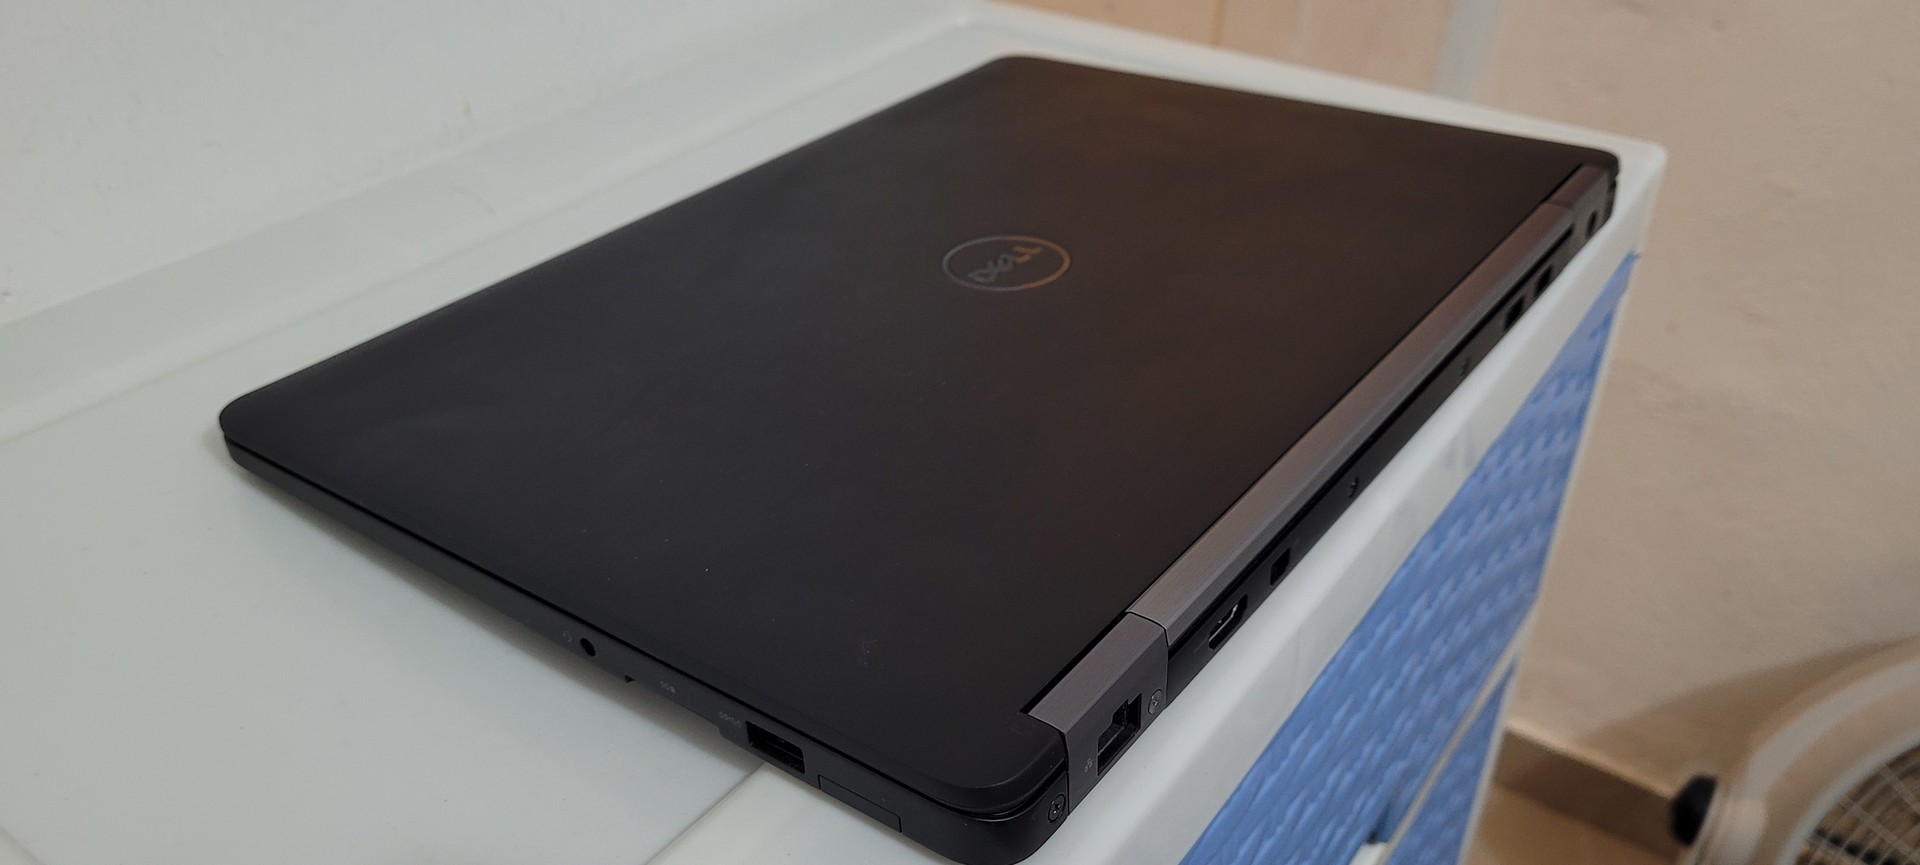 computadoras y laptops - Dell 5470 14 Pulg Core i7 6ta Gen Ram 8gb ddr4 Disco 256gb SSD Solido wifi 2